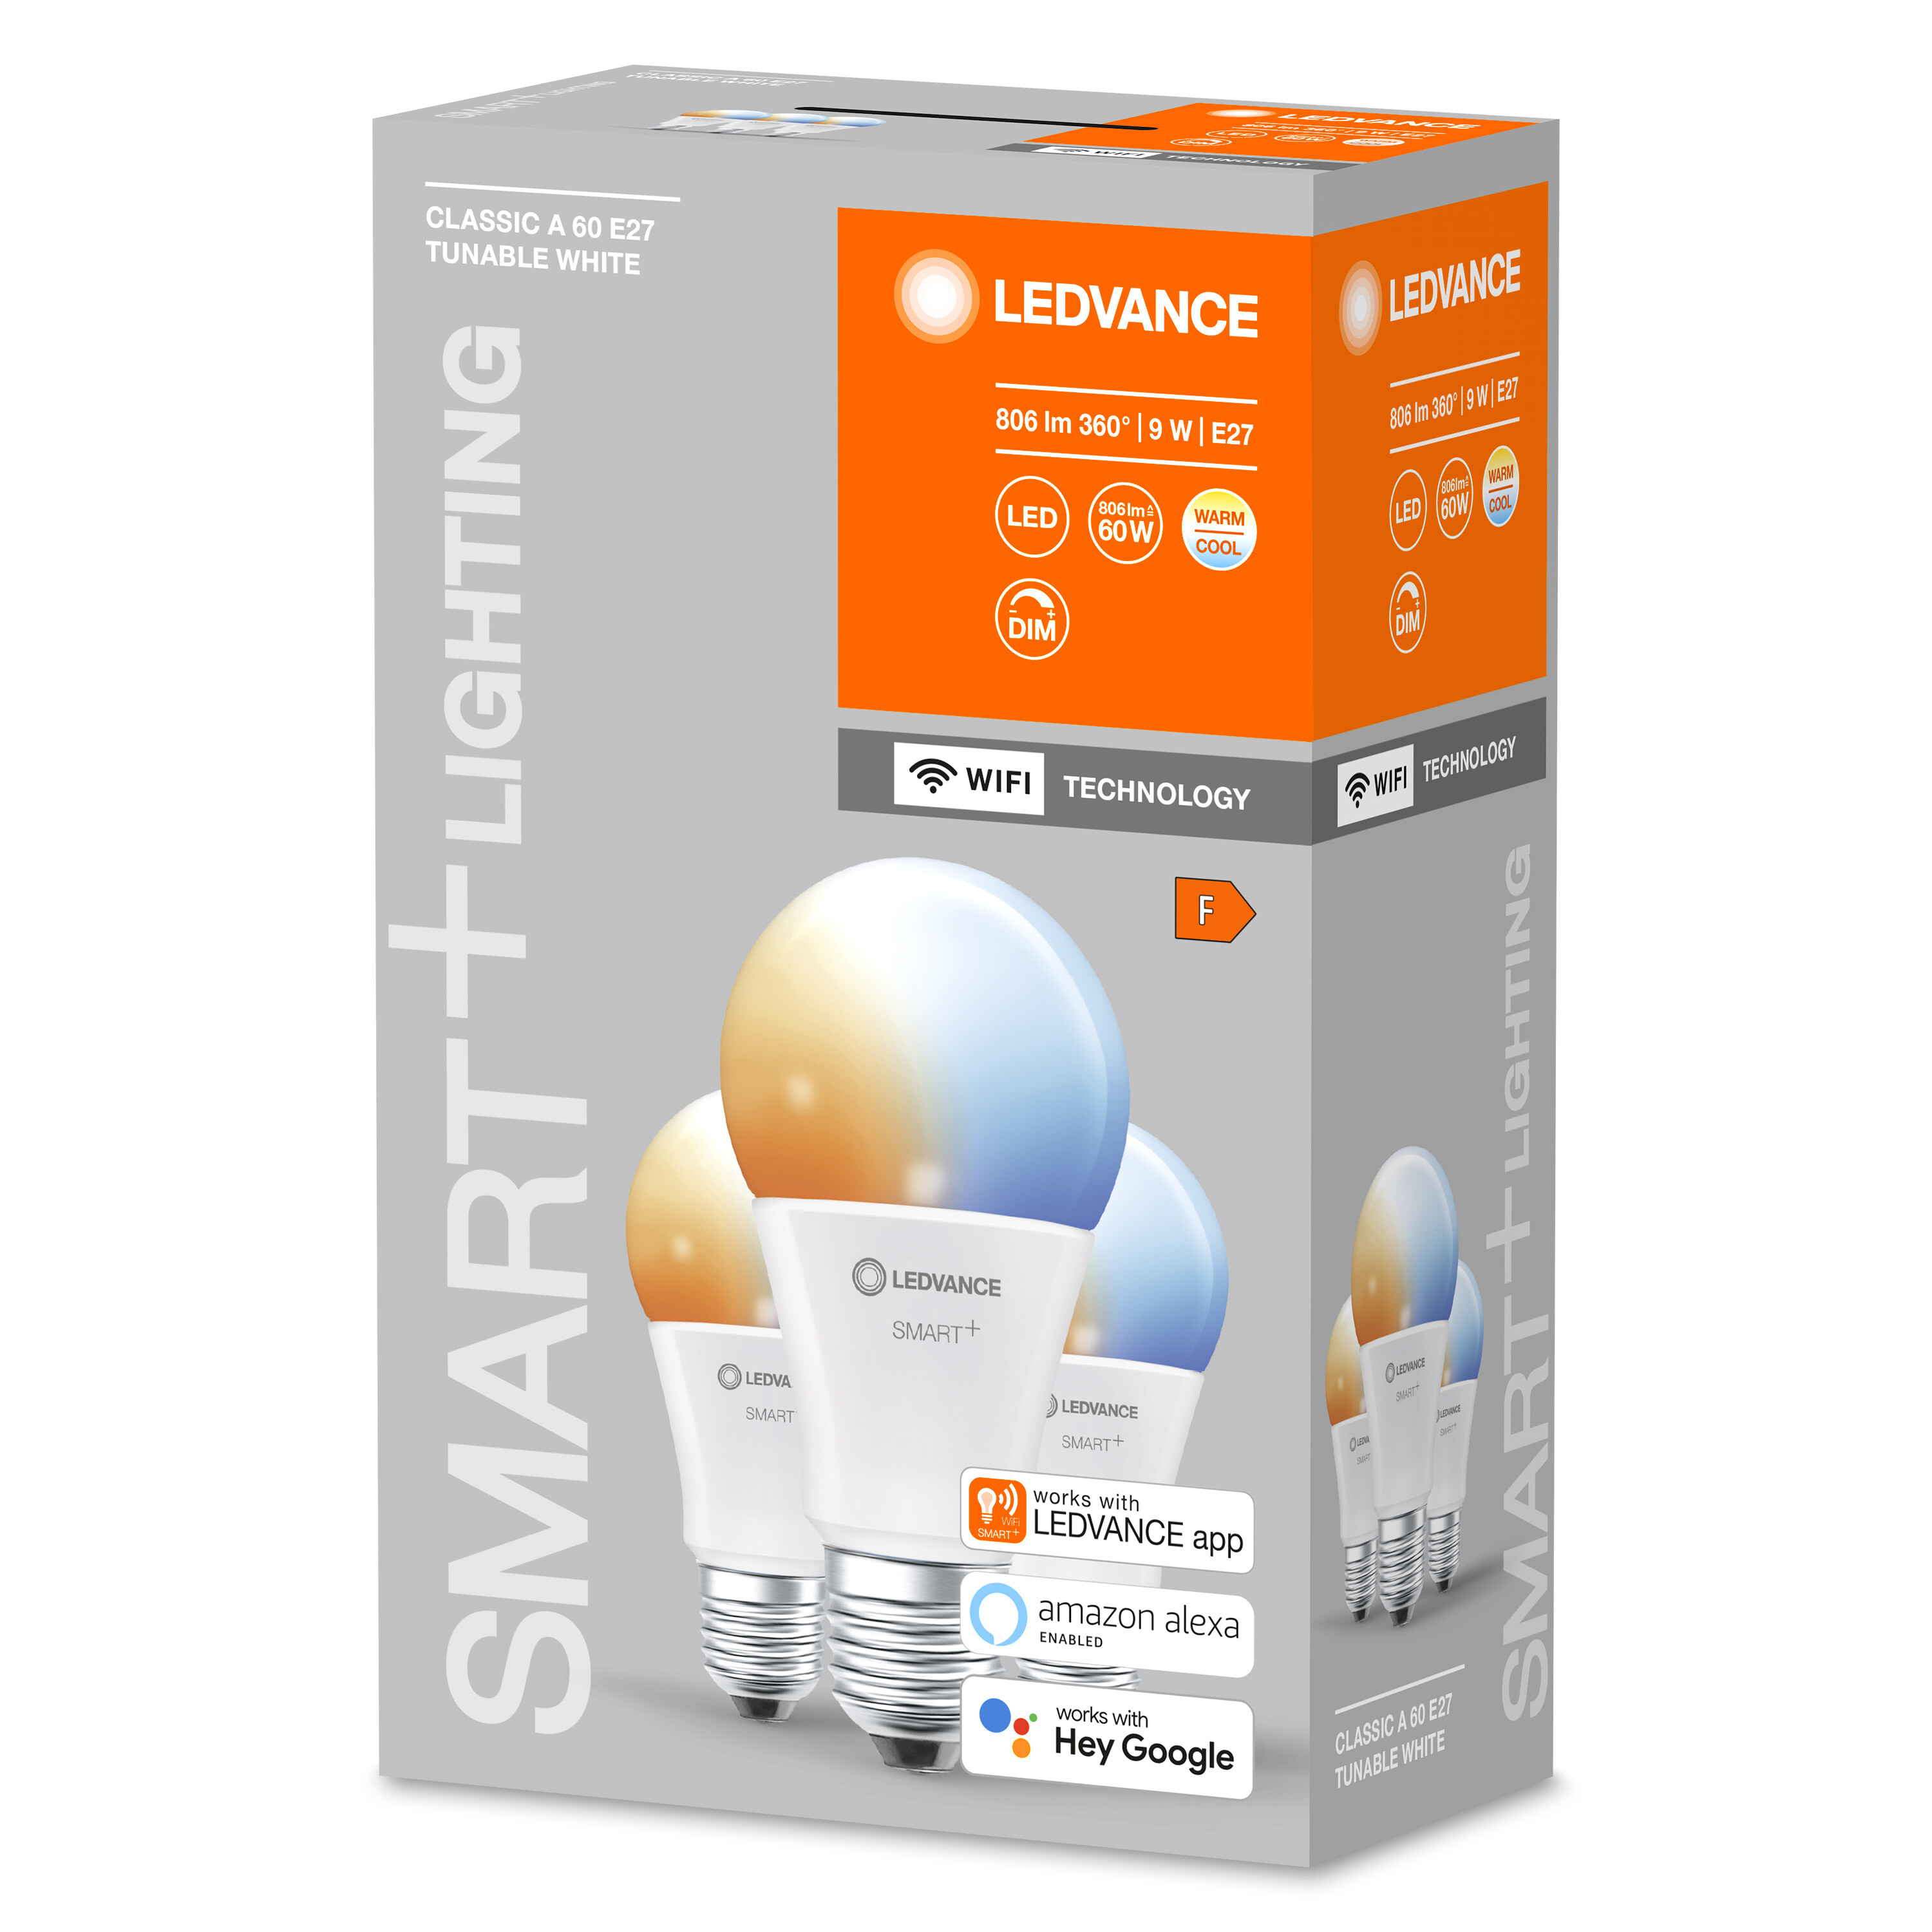 LEDVANCE LED SMART+ Lichtfarbe White Classic änderbar Tunable Lampe WiFi